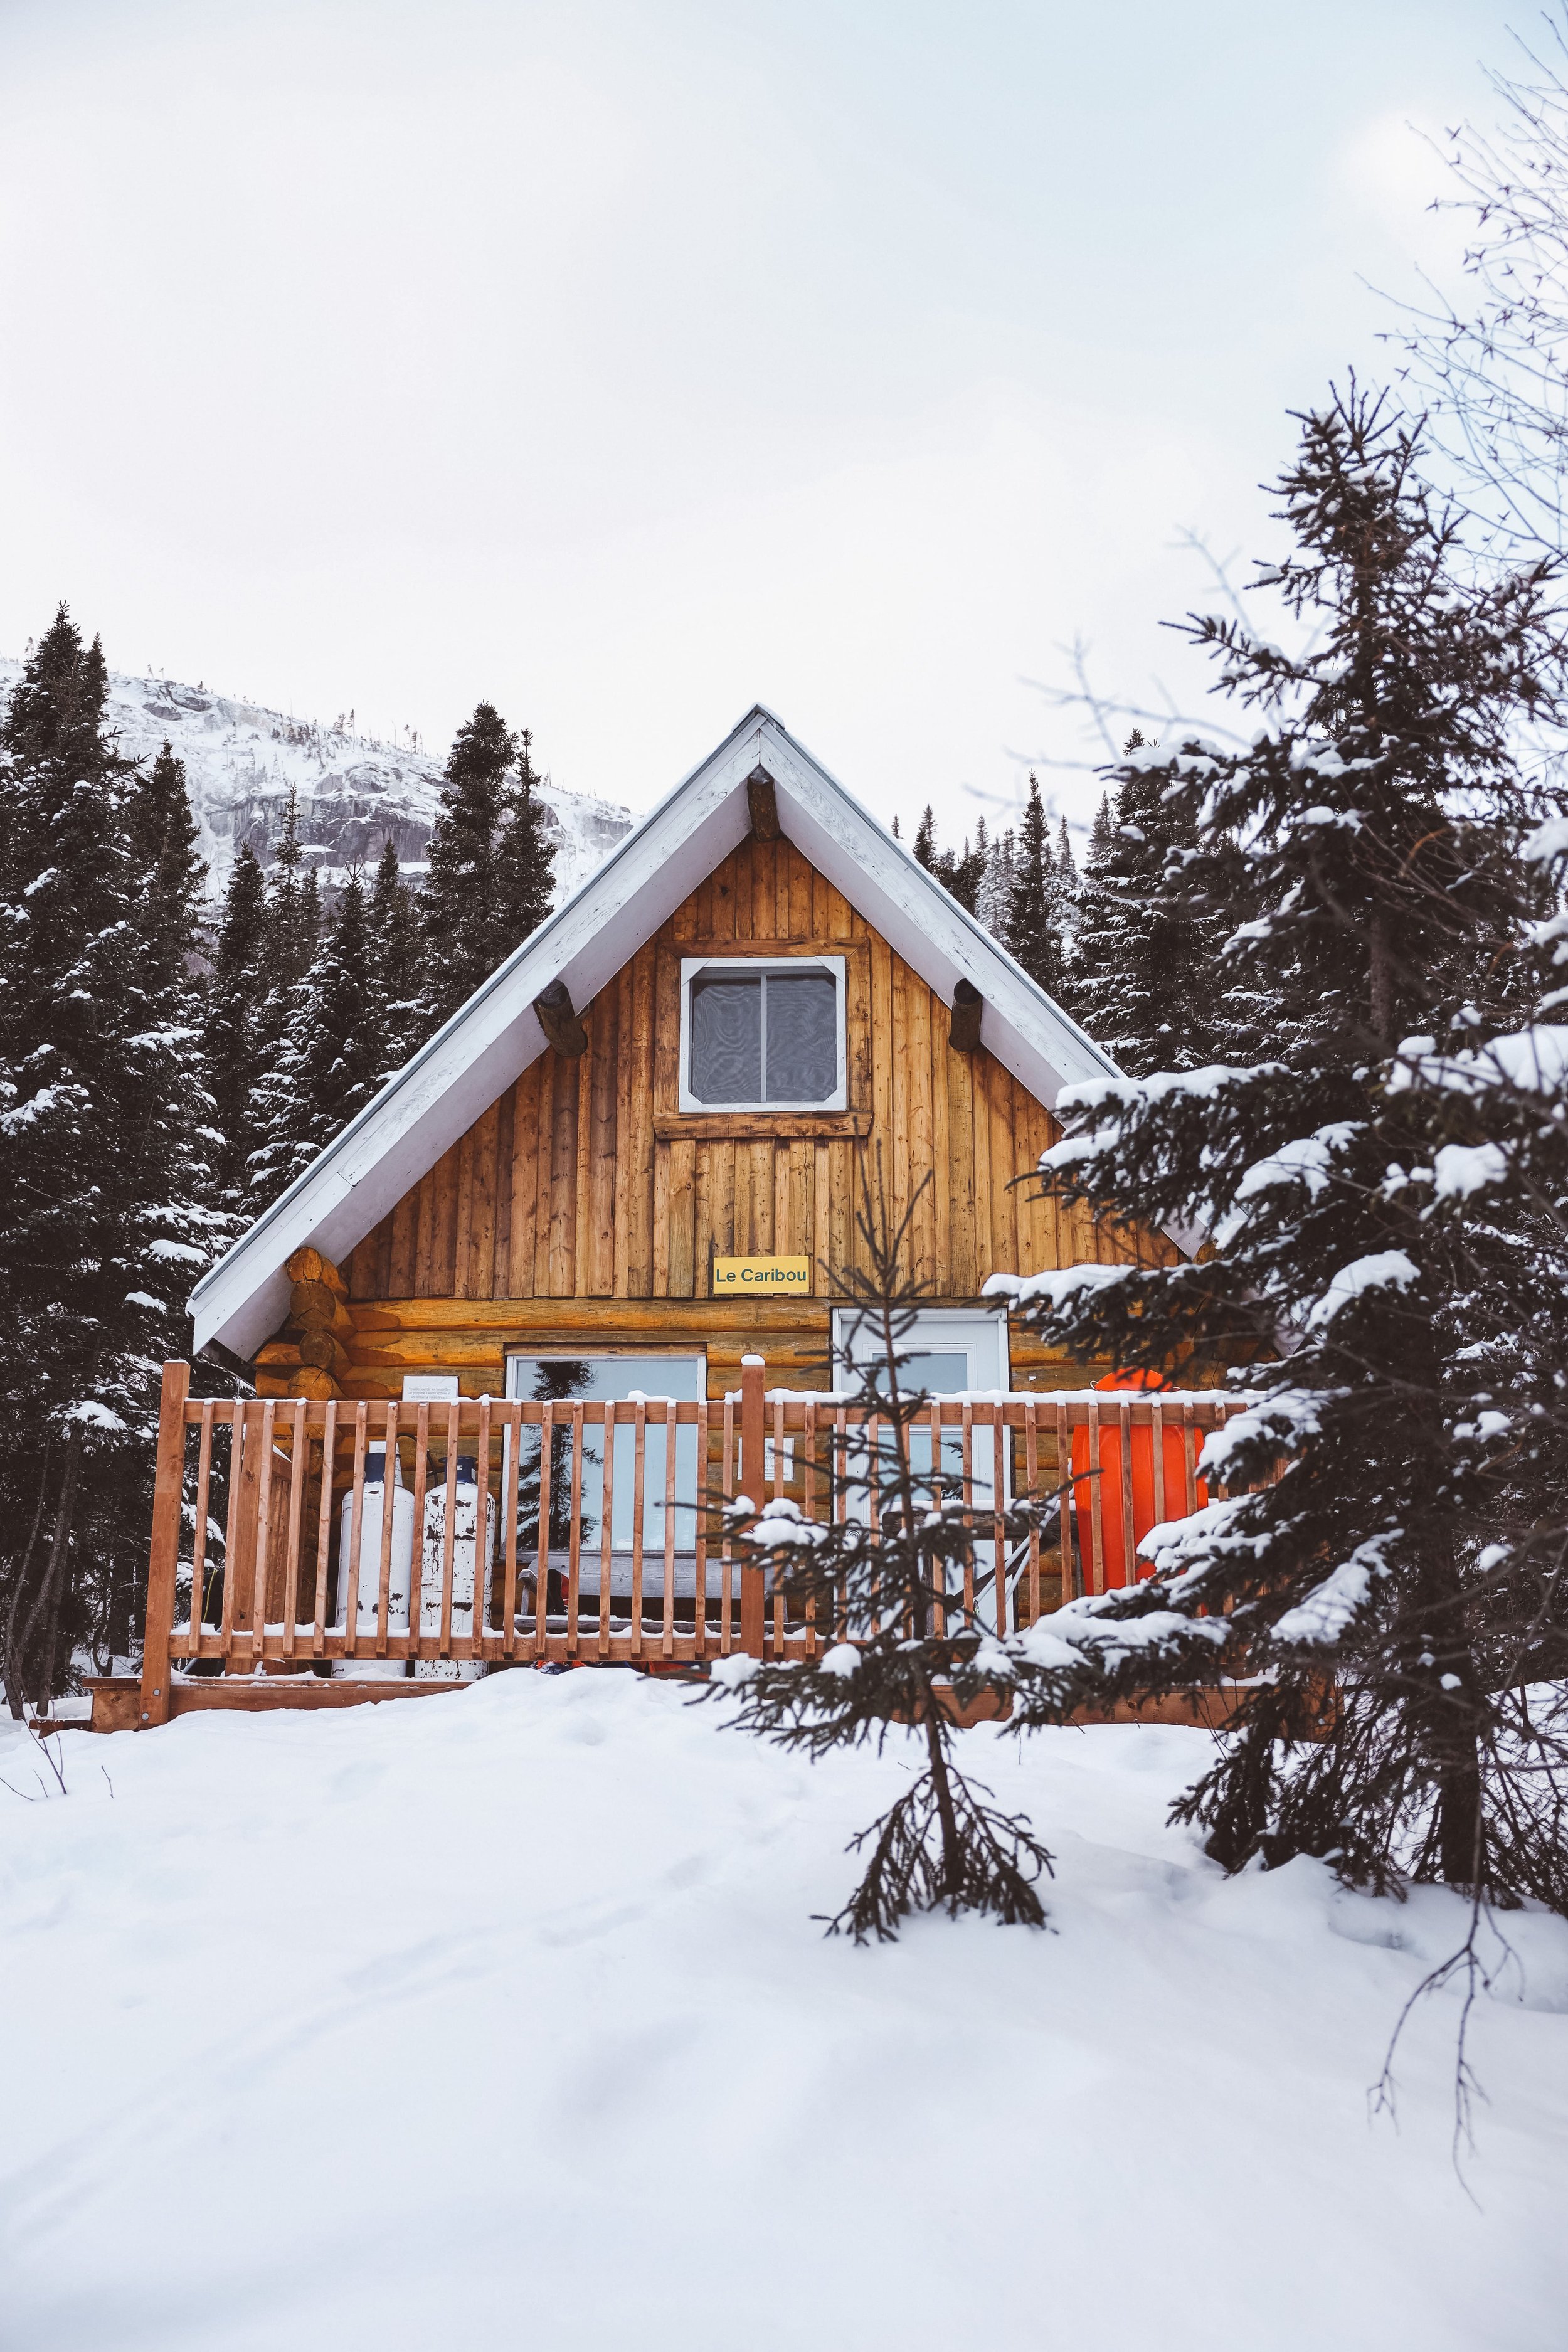 Cute little wooden cabin - Mount du Dôme - Charlevoix - Quebec - Canada